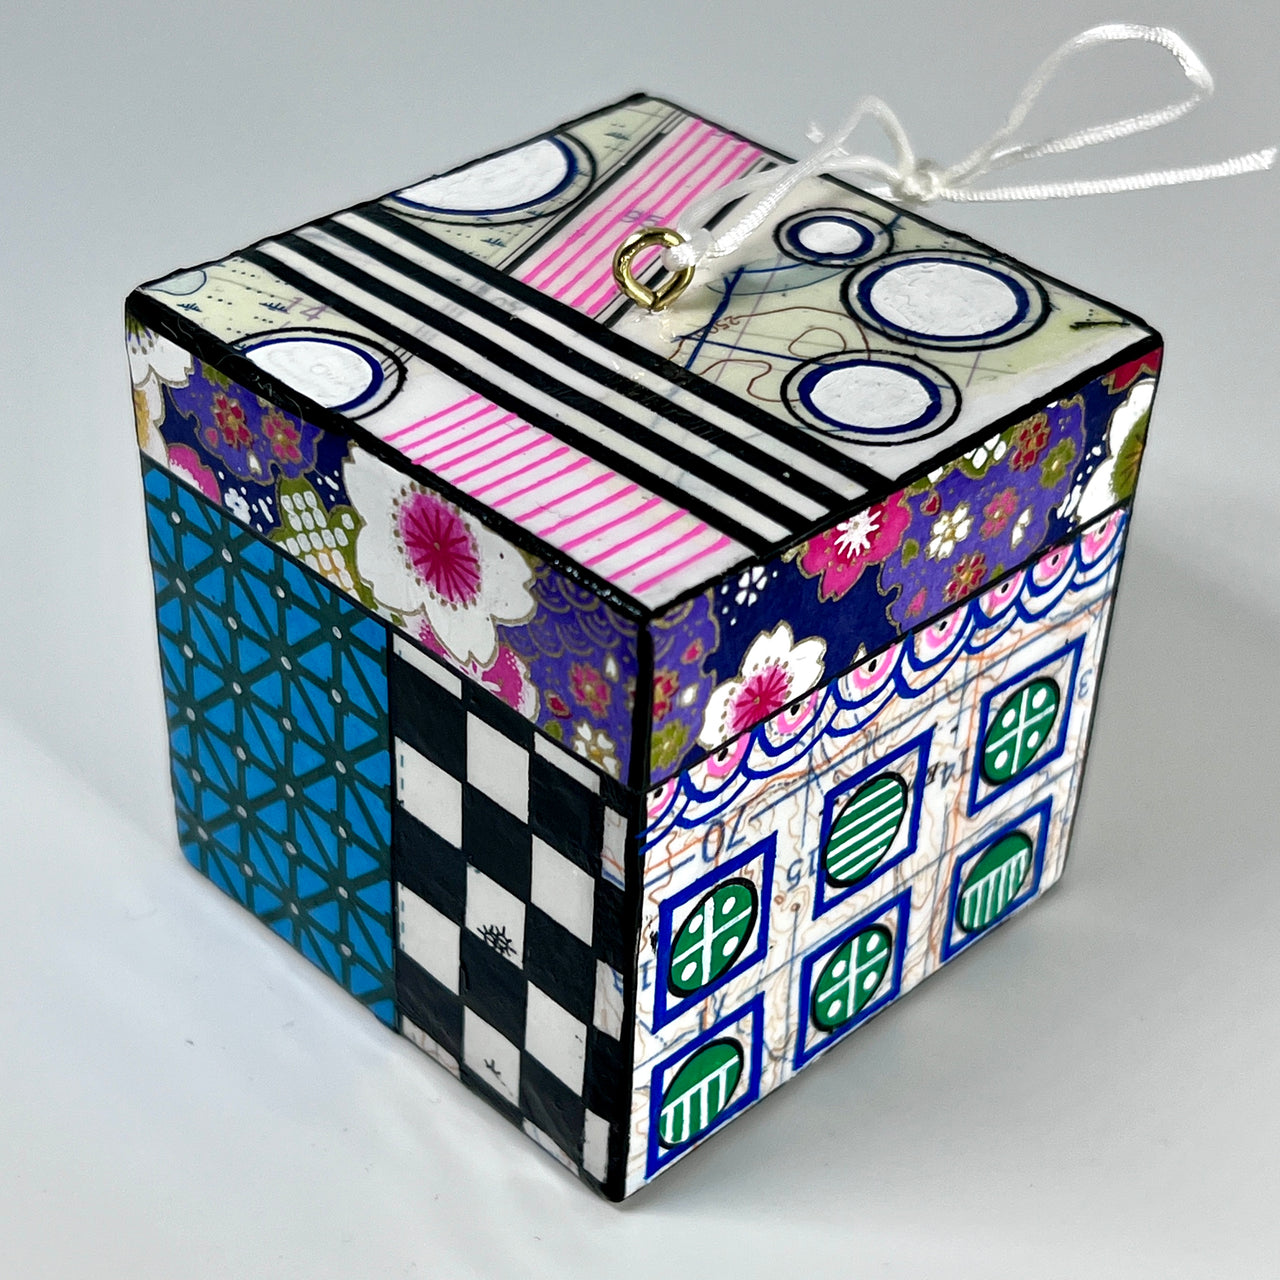 #10 - 3D Cube Art - 2.25" cube